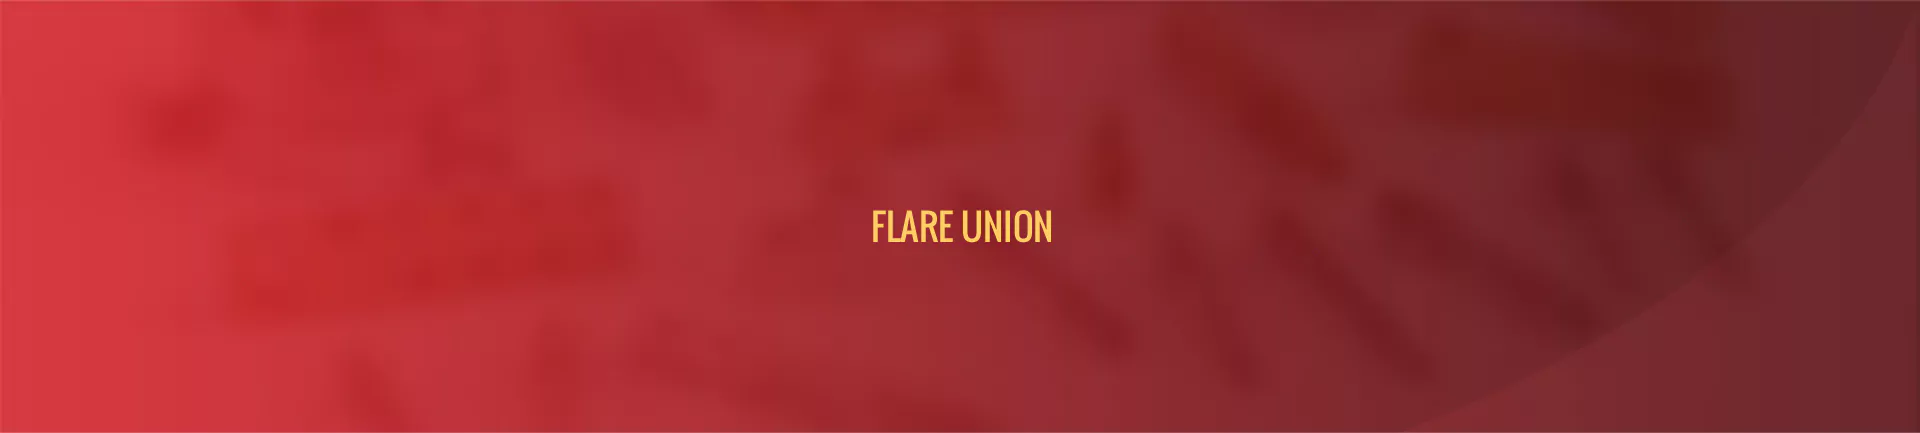 flare-union-banner